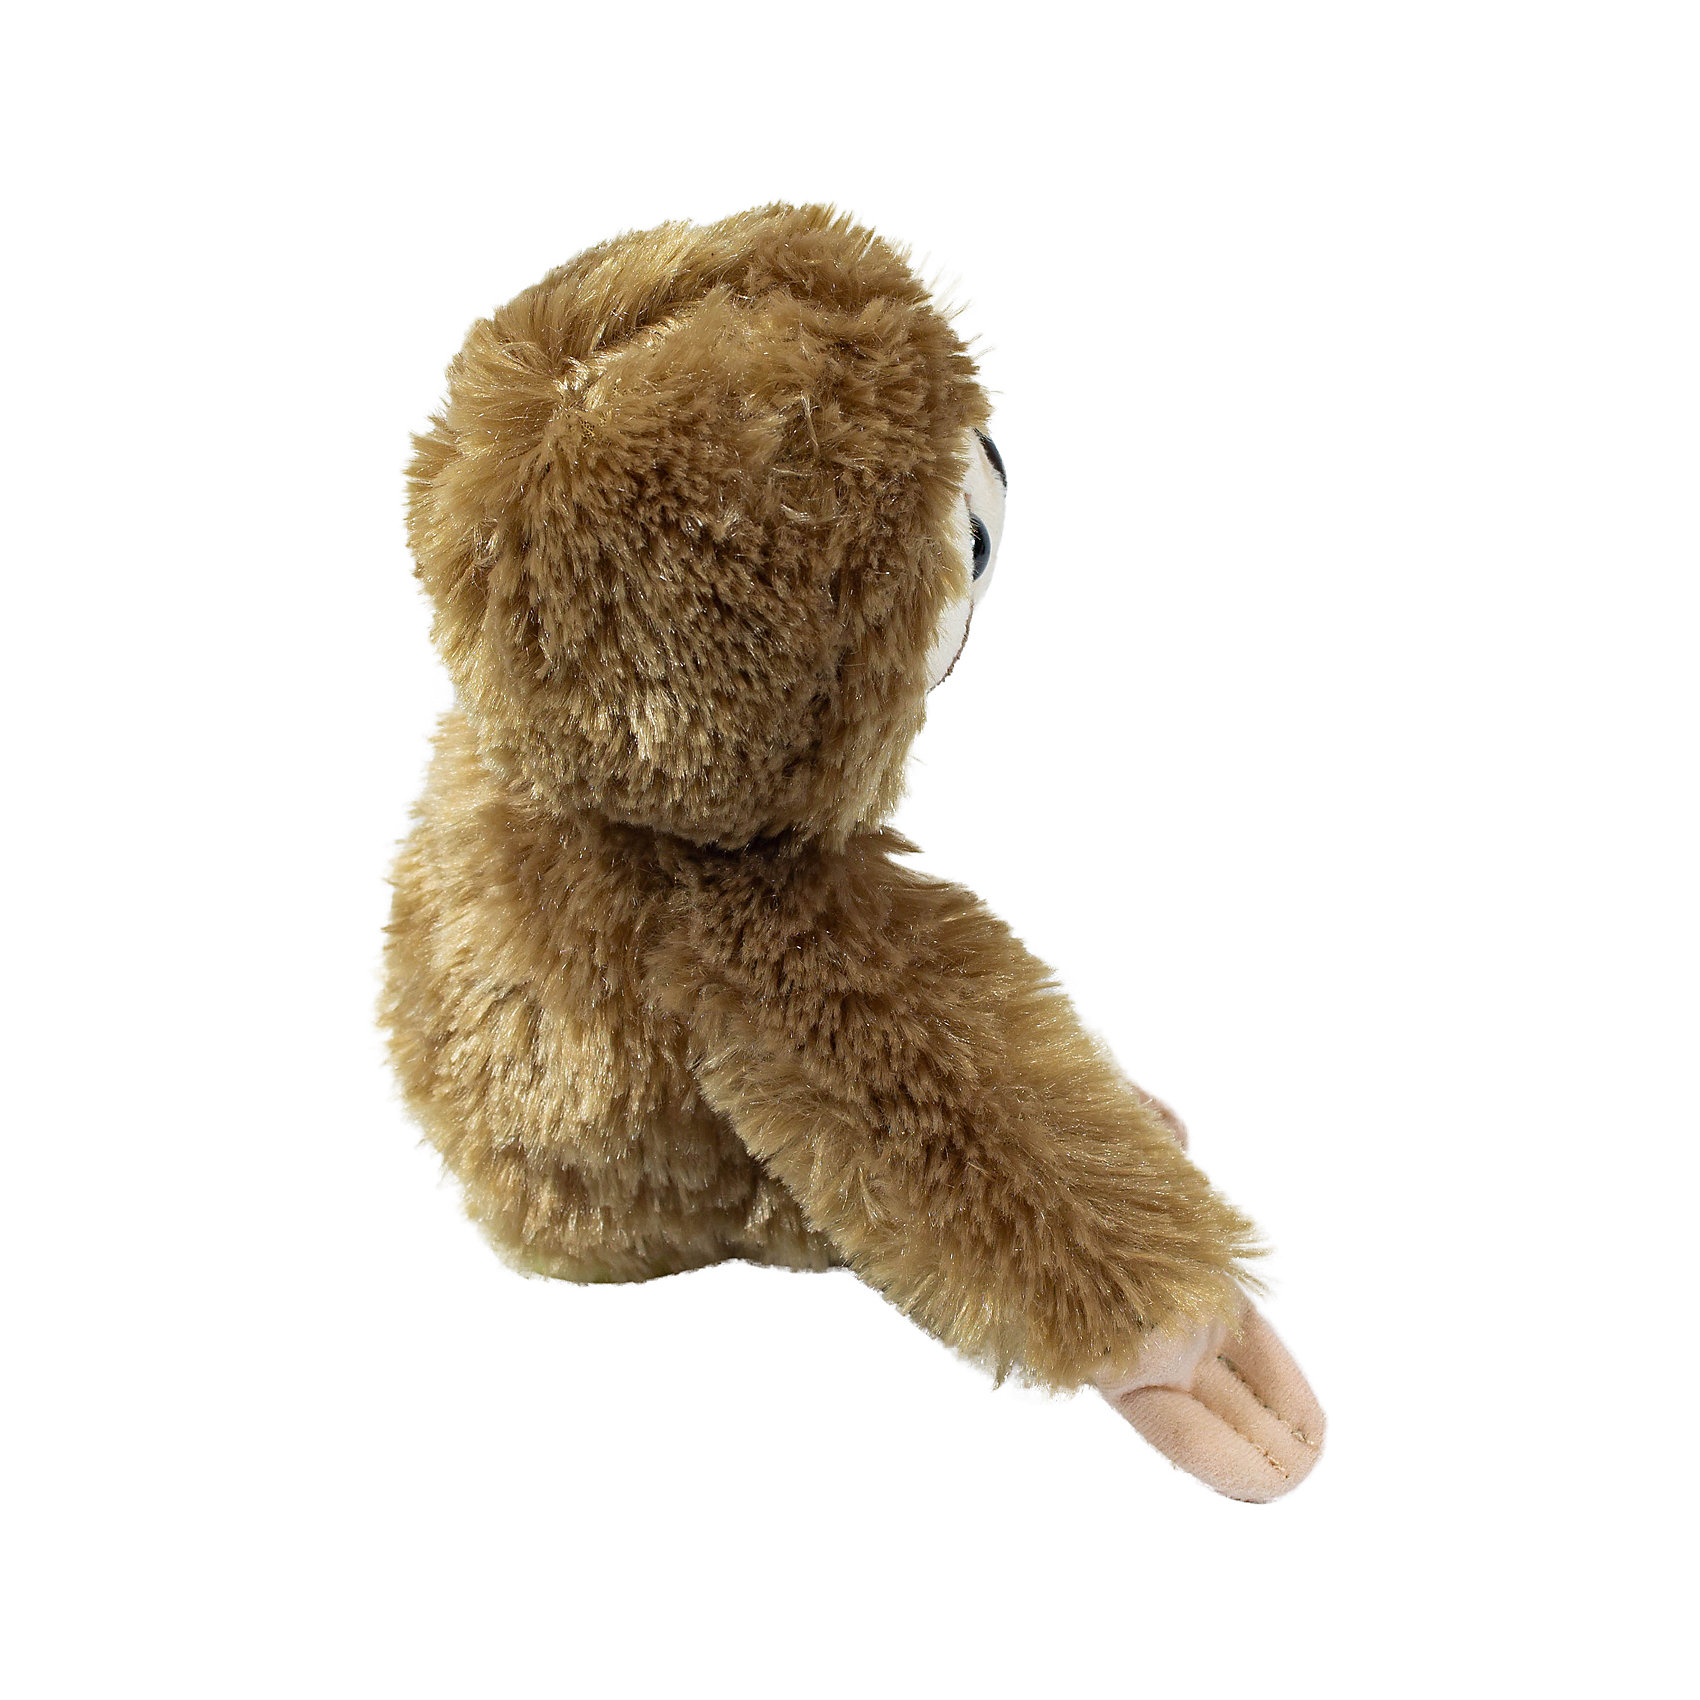 Мягкая игрушка Hug'ems Детёныш ленивца, 20 см Wild Republic 8277856